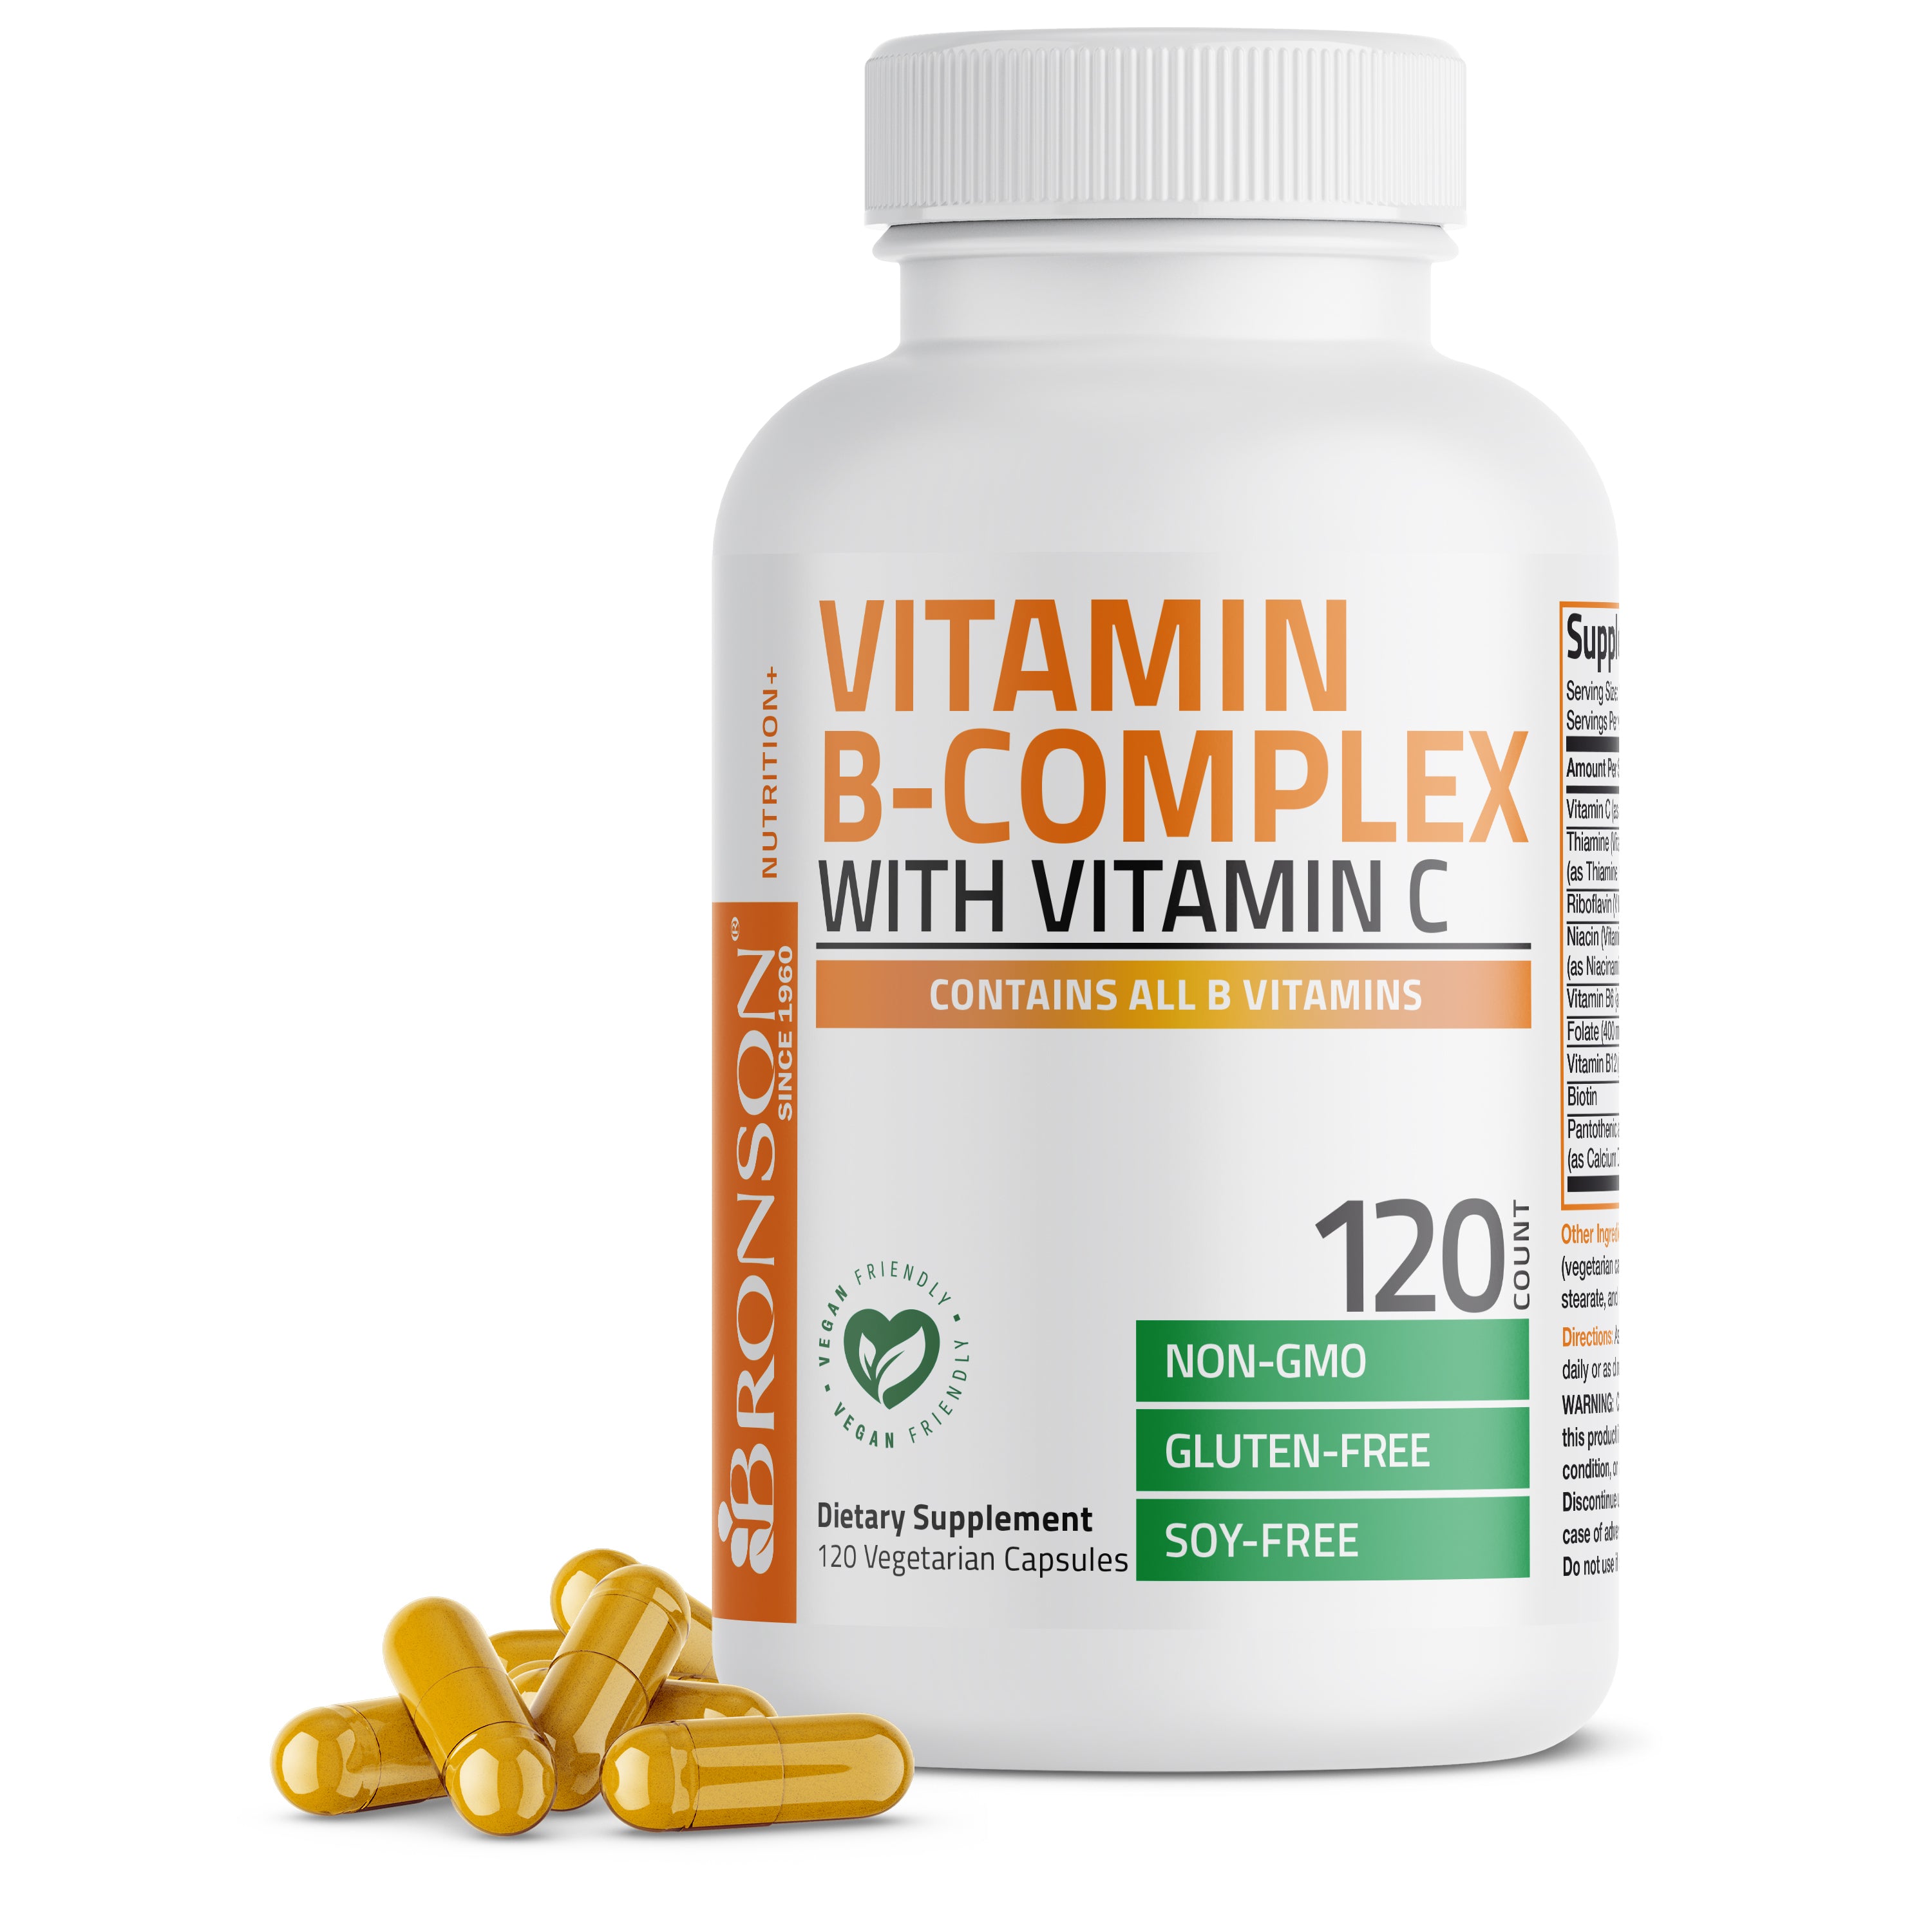 Vitamin B Complex with Vitamin C view 7 of 6